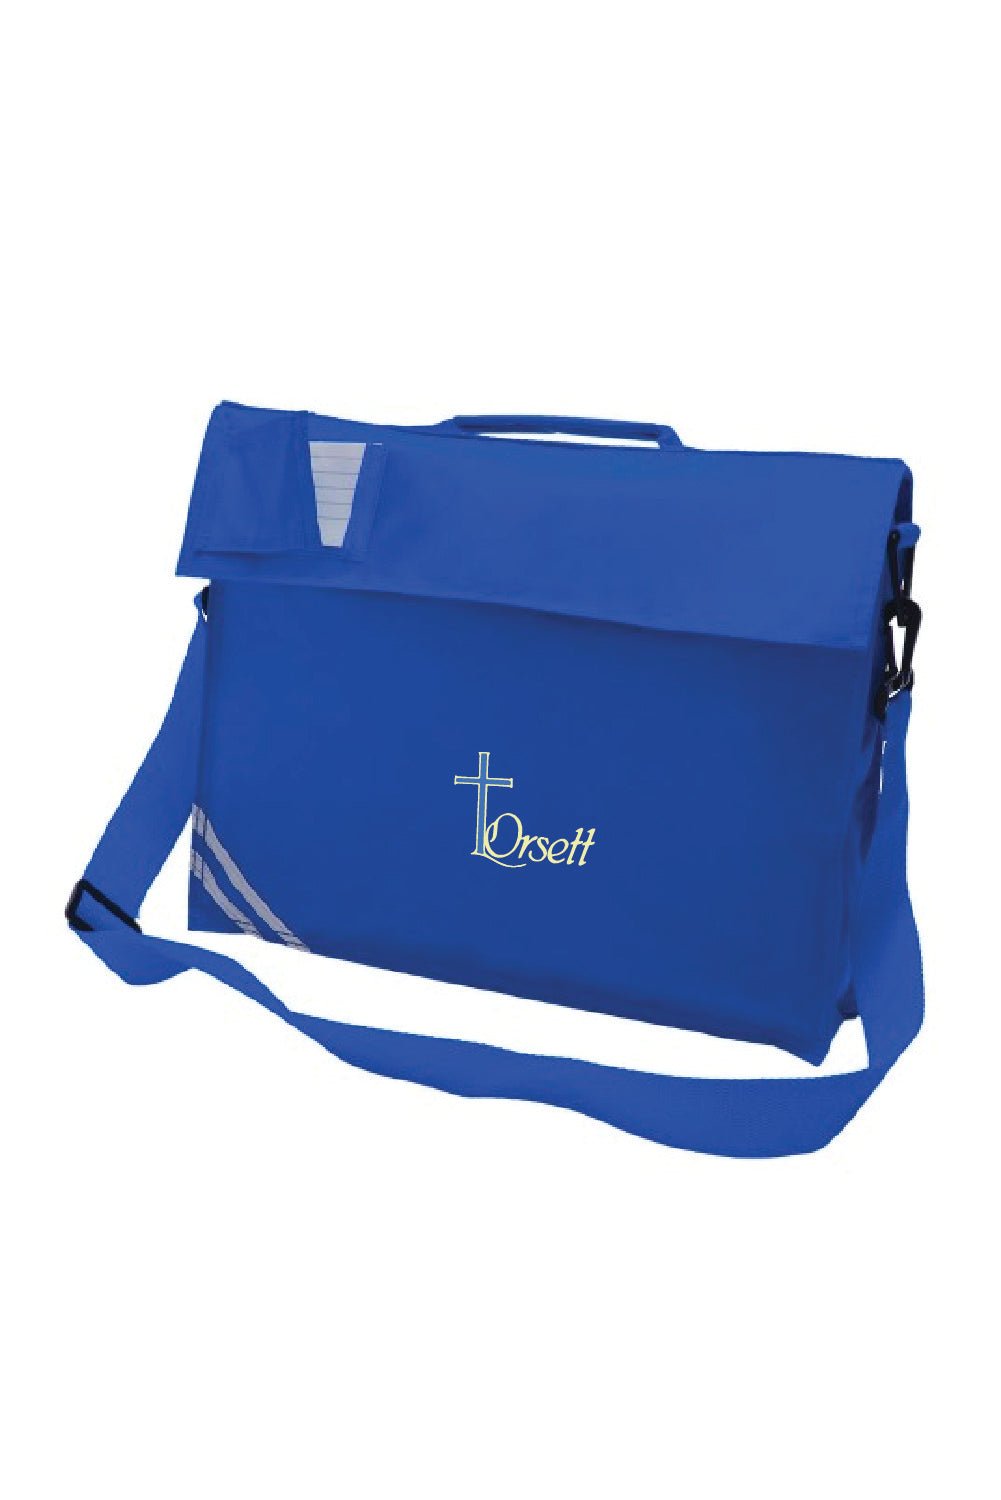 Orsett Primary bookbag with personalisation -new logo - Uniformwise Schoolwear